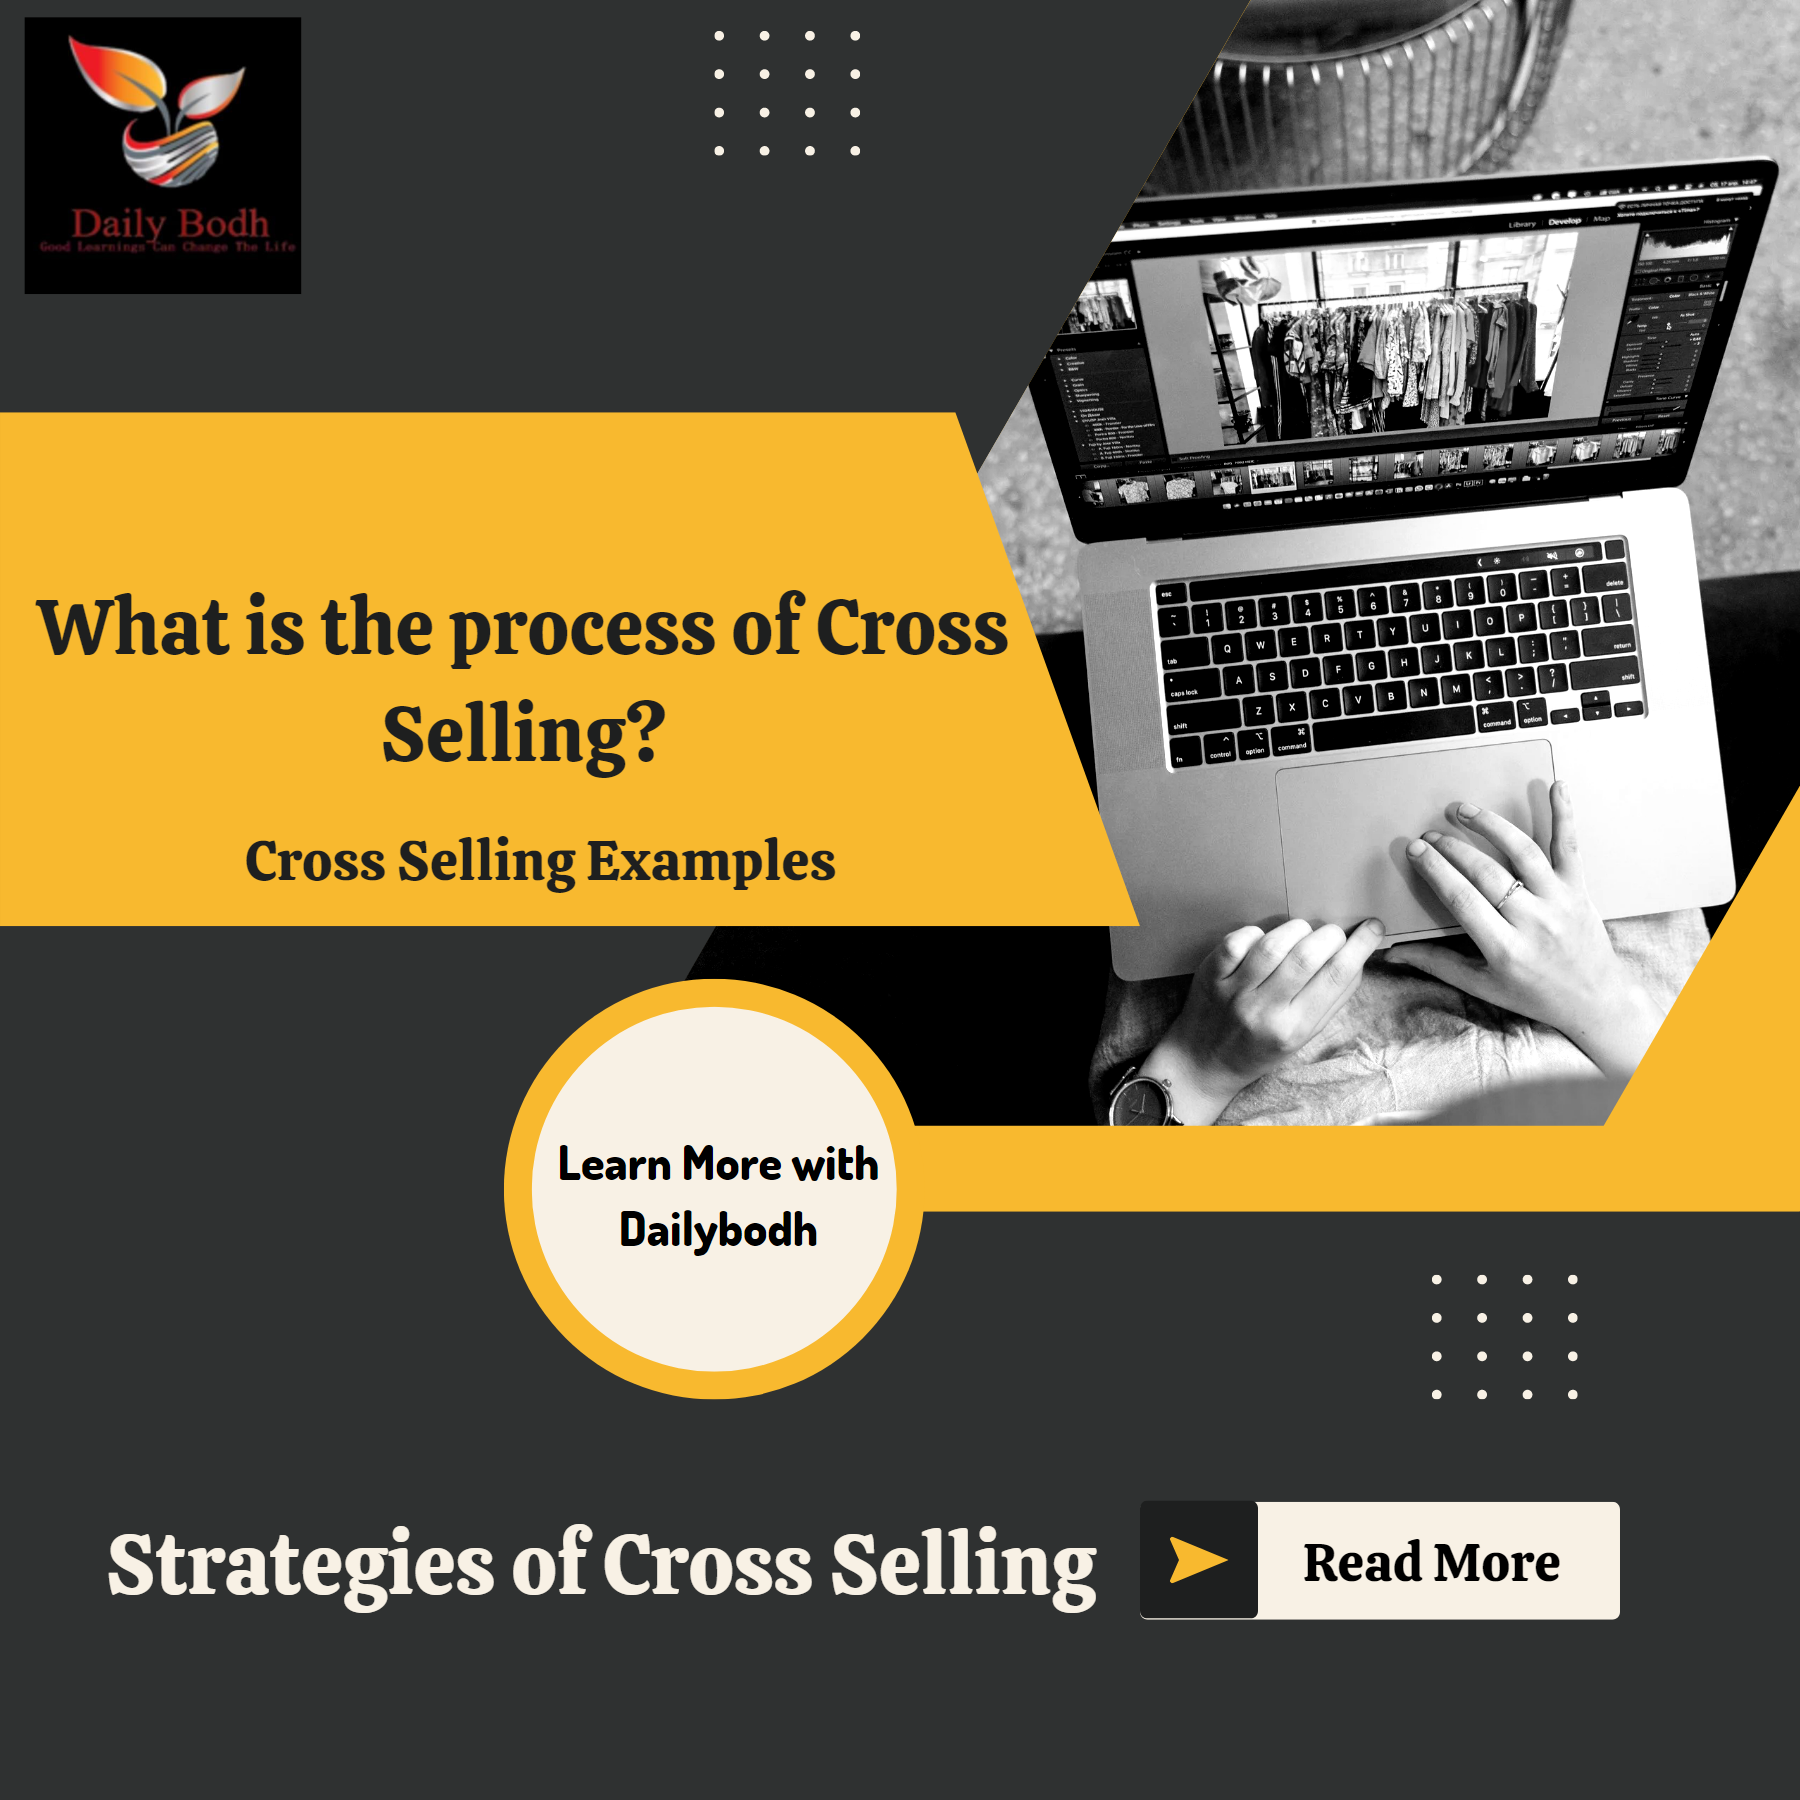 Cross Selling Strategy